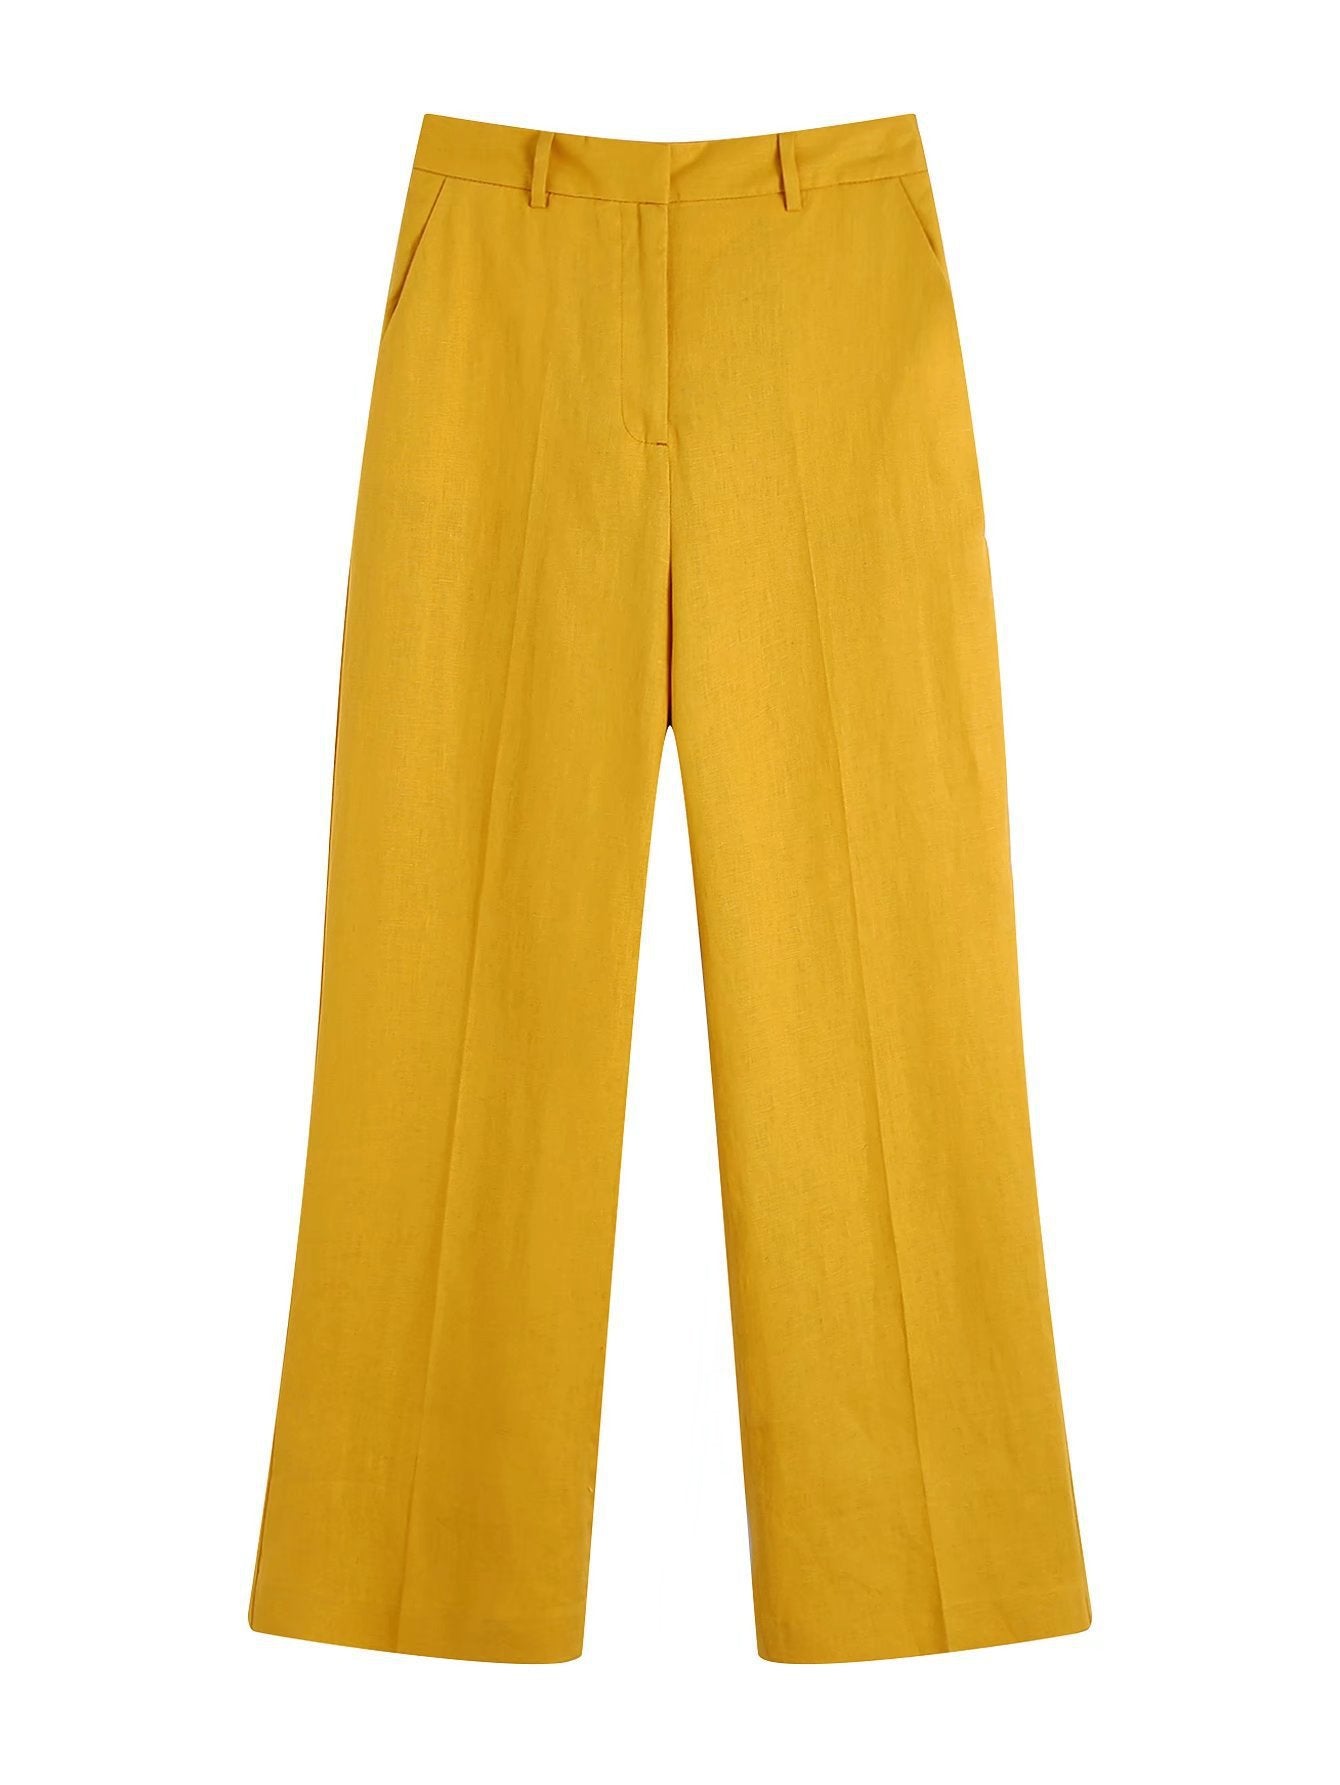 Lyra Regular Fit Women Yellow Trousers - Price History